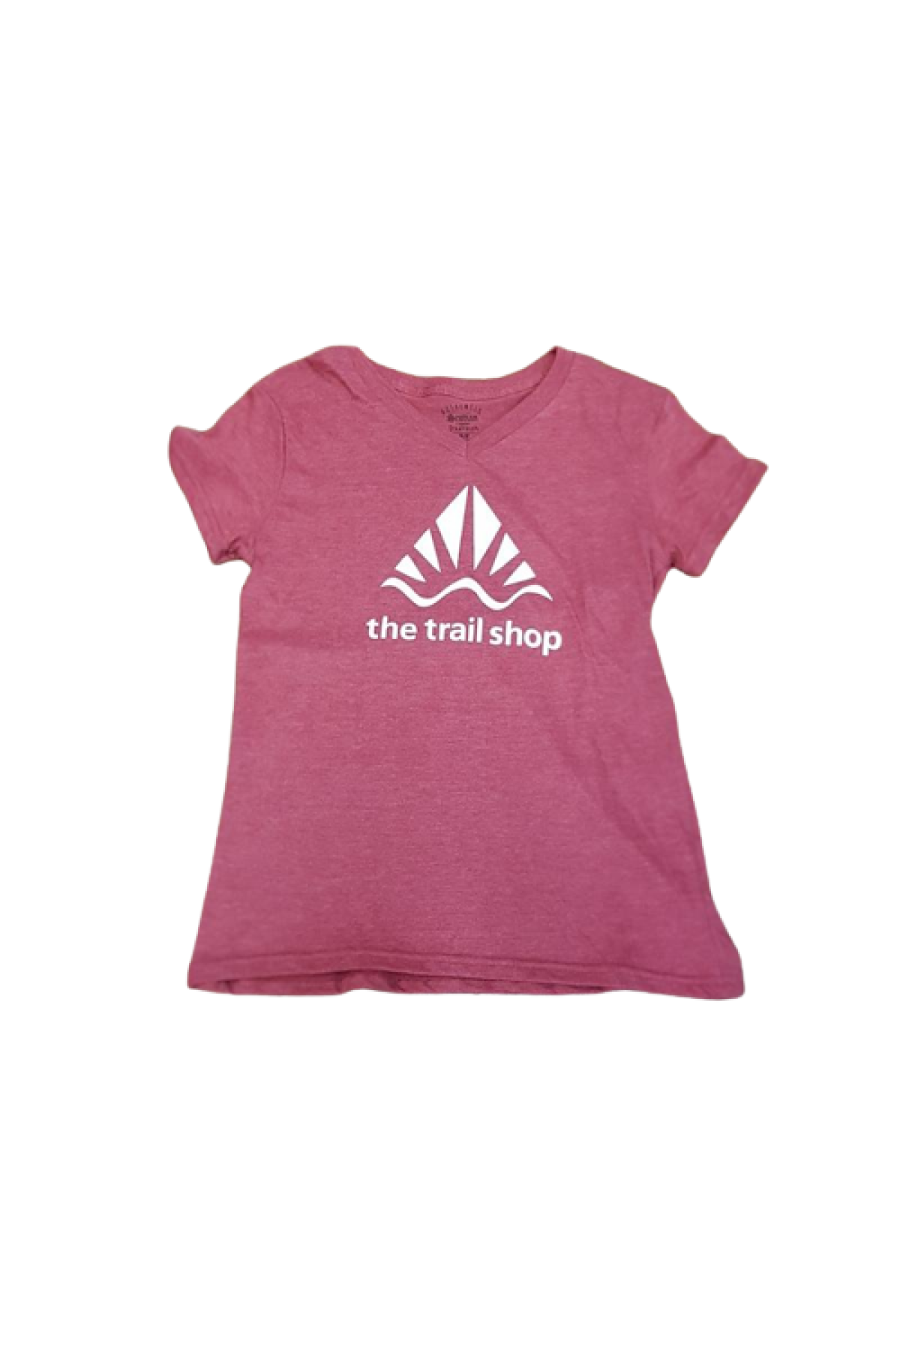 Trail Shop Women's 'The Trail Shop' T-Shirt